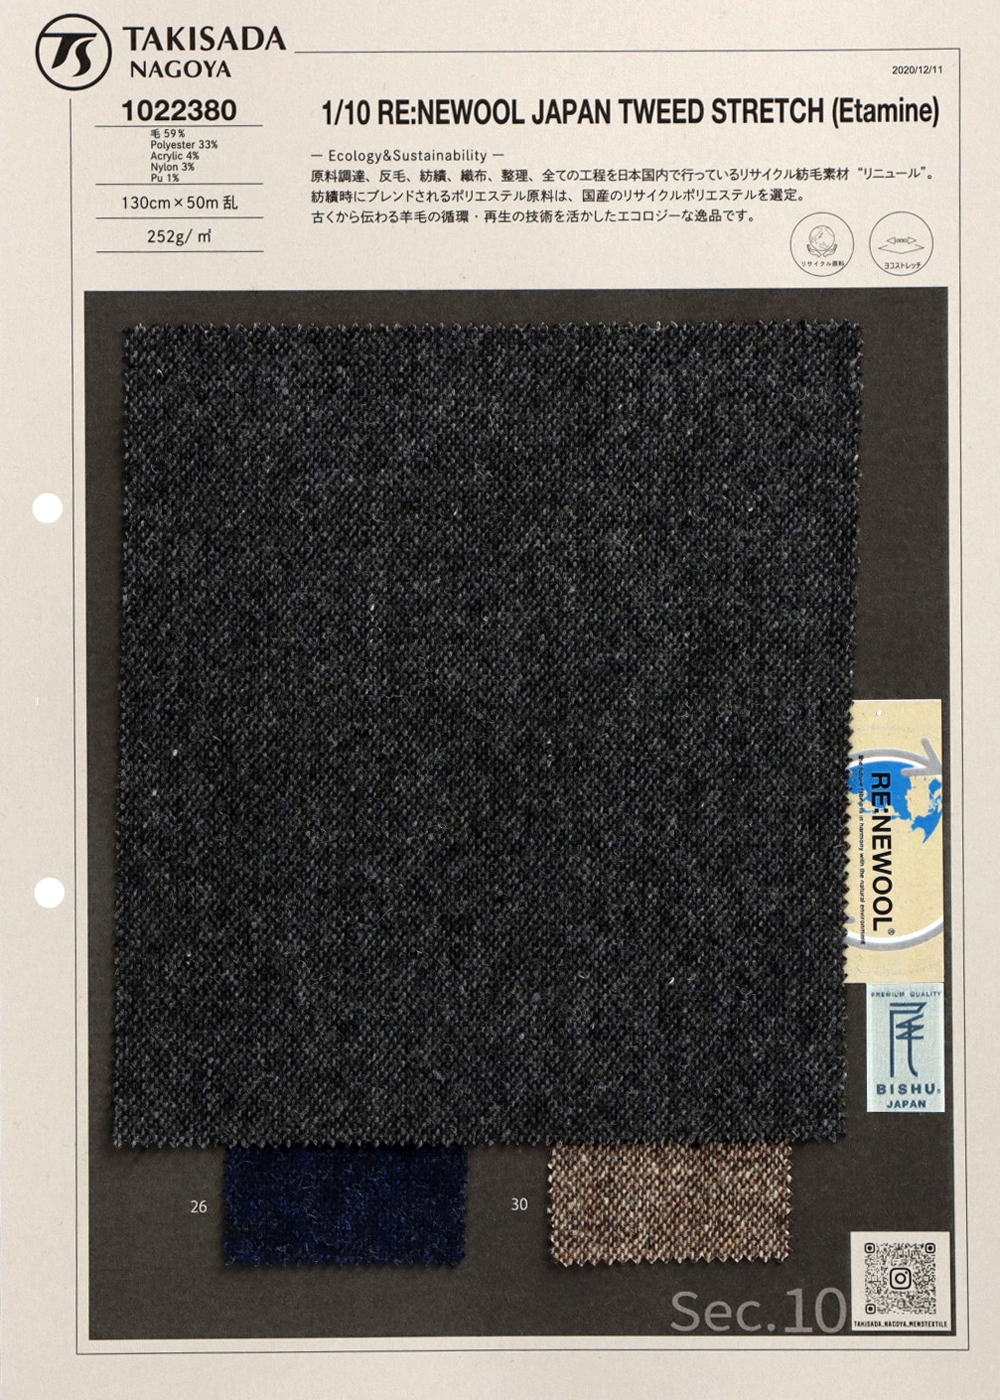 1022380 1/10 RE:NEWOOL® Stretch Home Spun[Fabrication De Textile] Takisada Nagoya